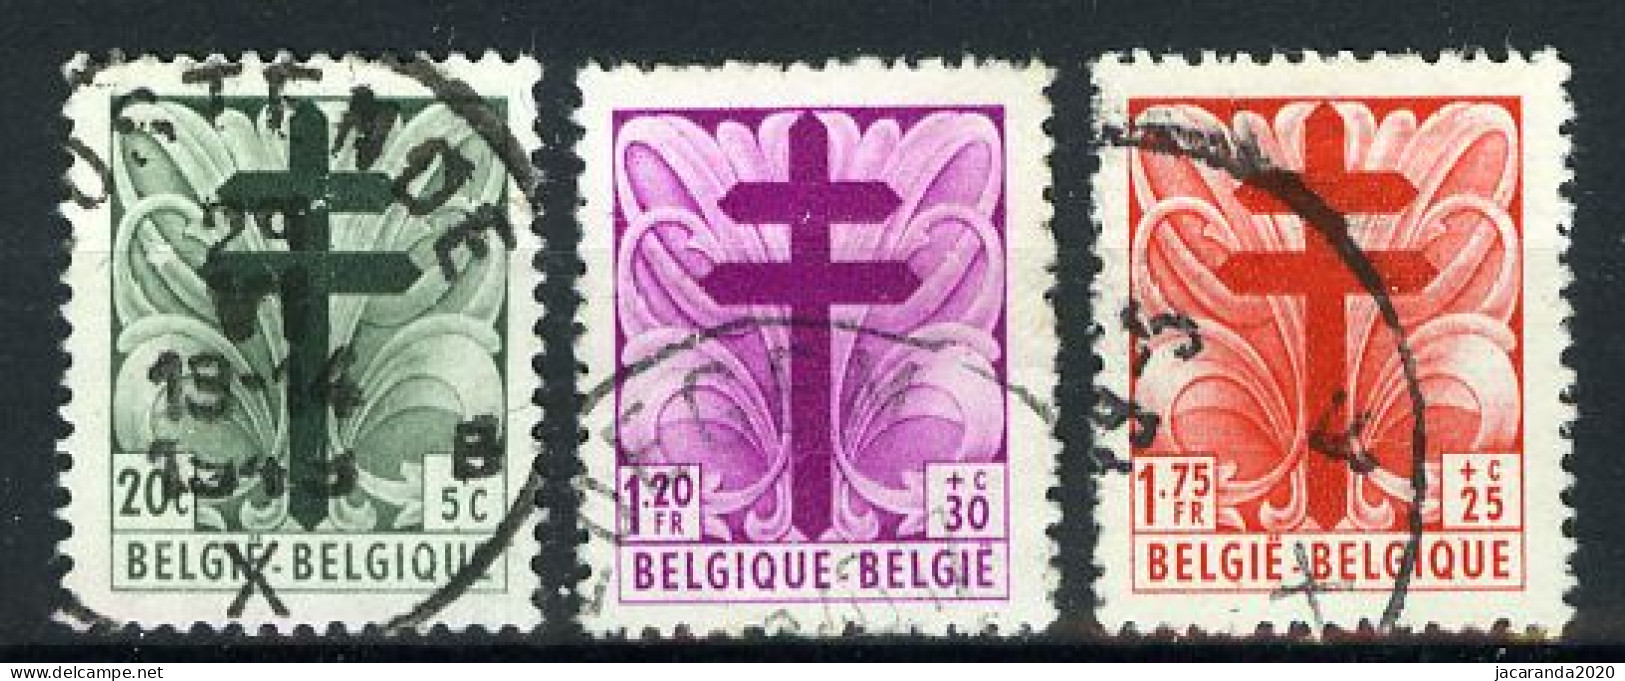 België 787/89 - Antitering - Kruis Van Lotharingen - Portretten Van De Senaat III - Gestempeld - Oblitéré - Used - Usados